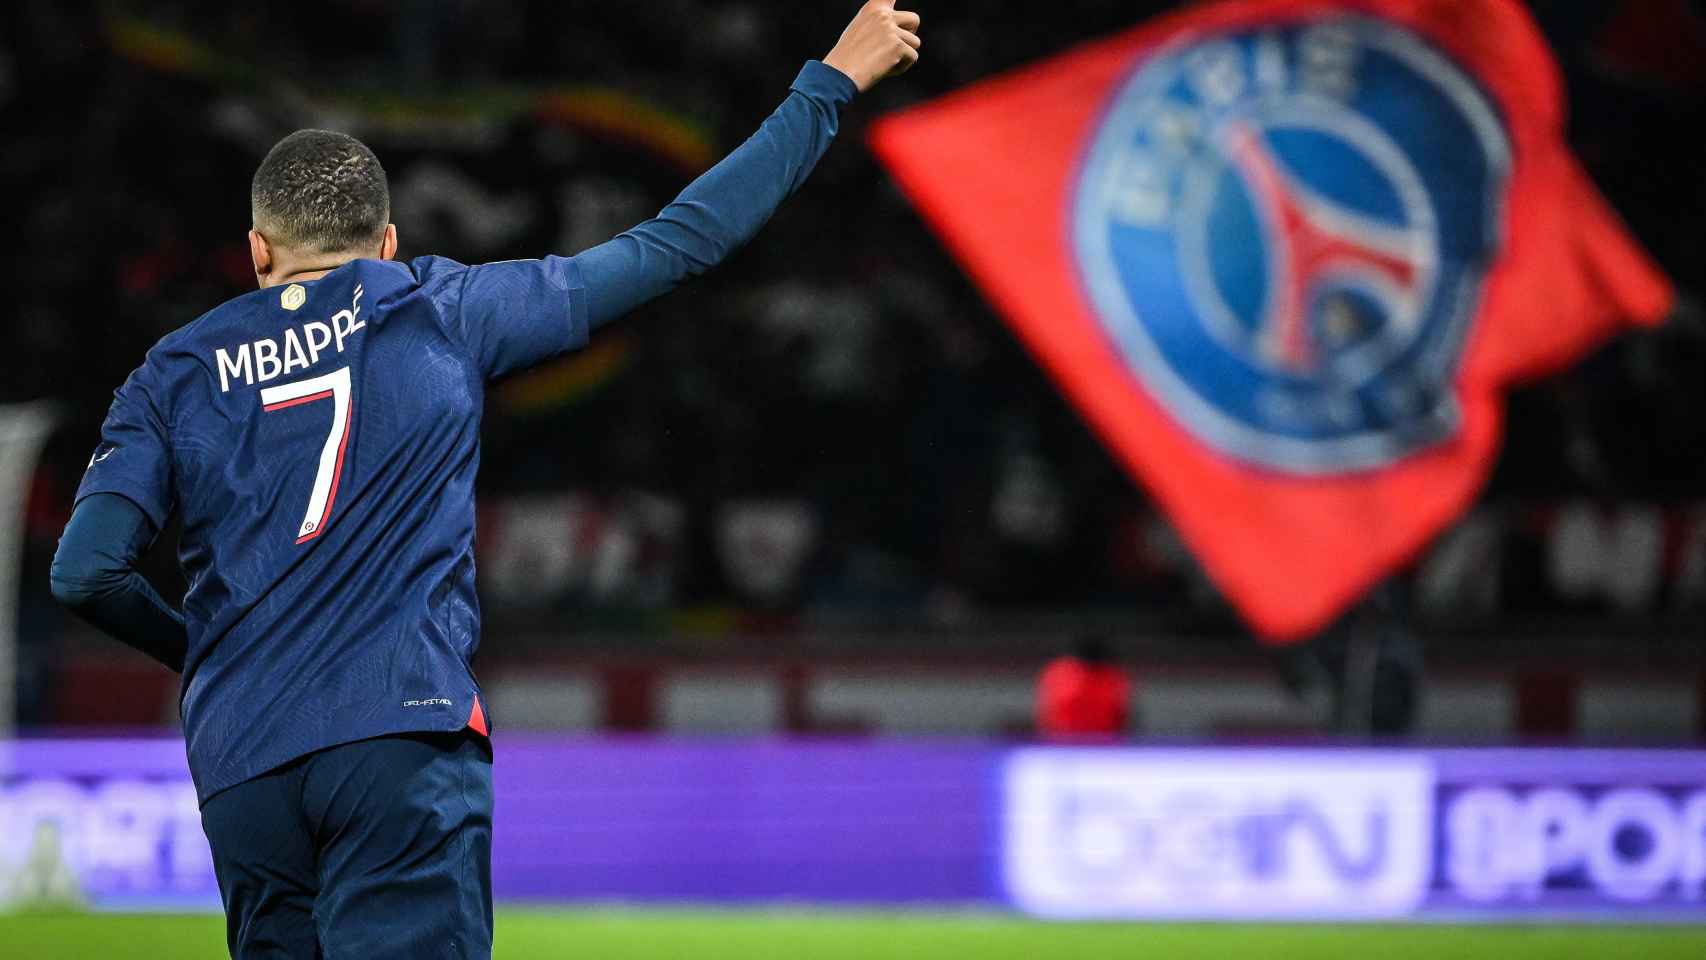 Kylian Mbappé celebra un gol con una bandera del PSG de fondo